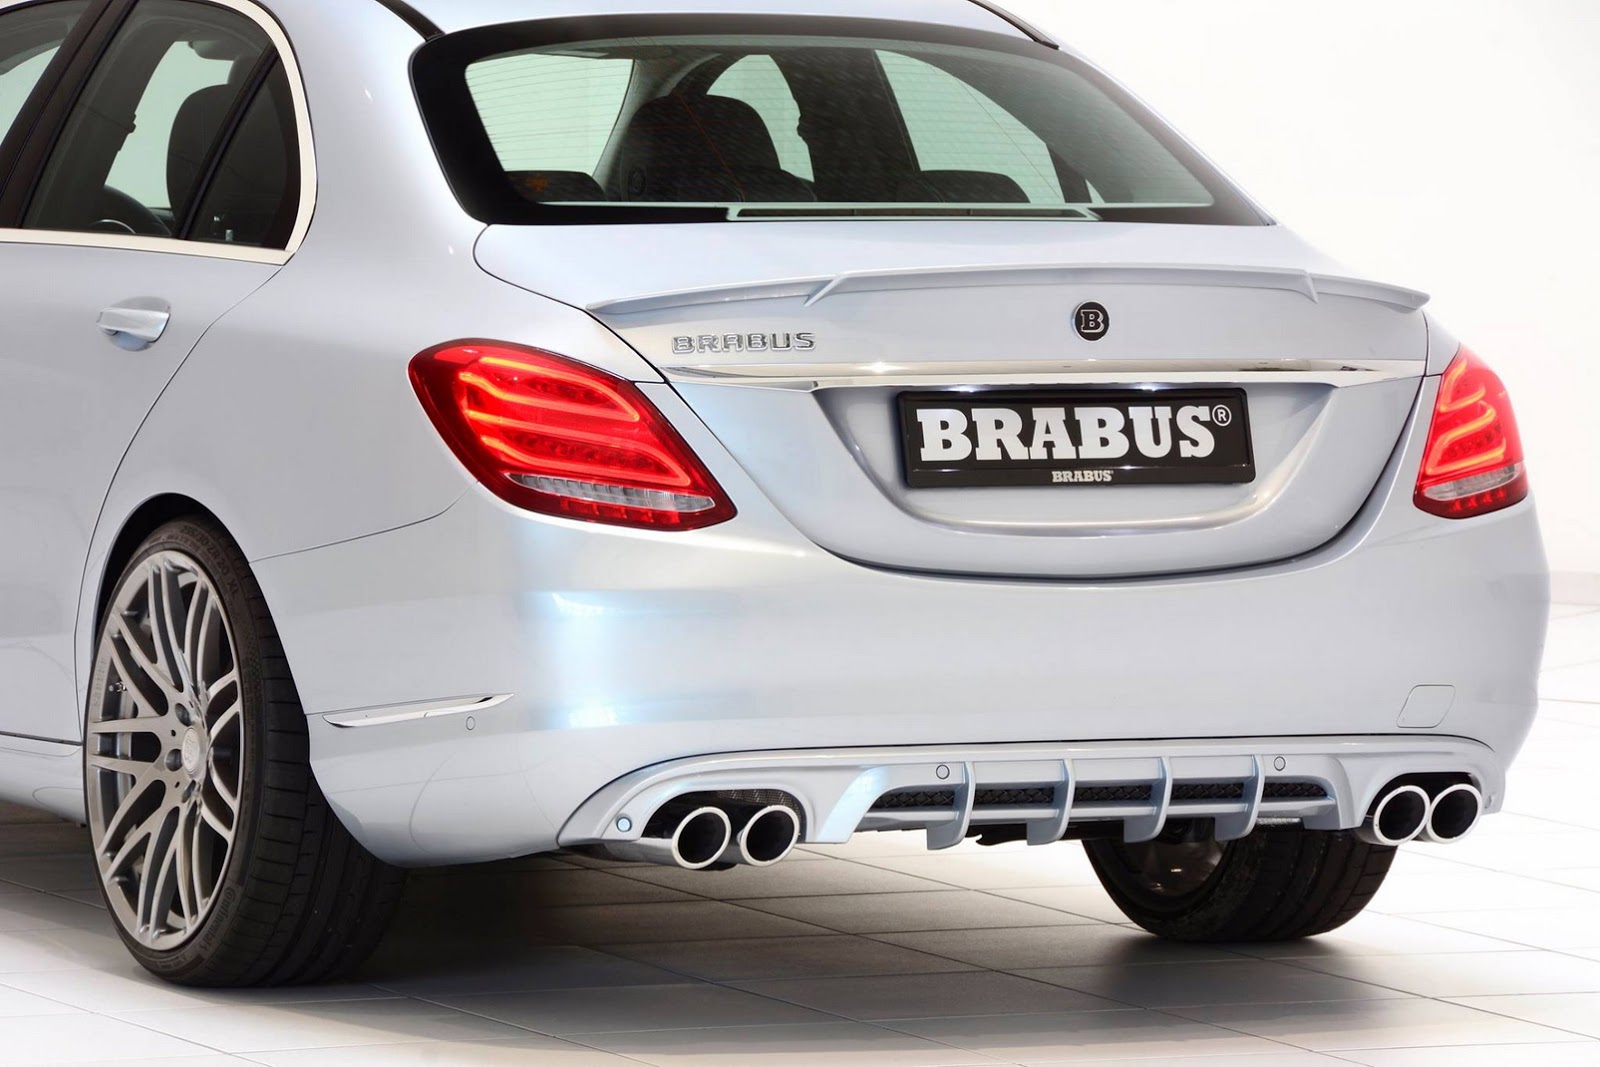 New Photos Of Brabus' Mercedes-Benz C-Class W205 Tune